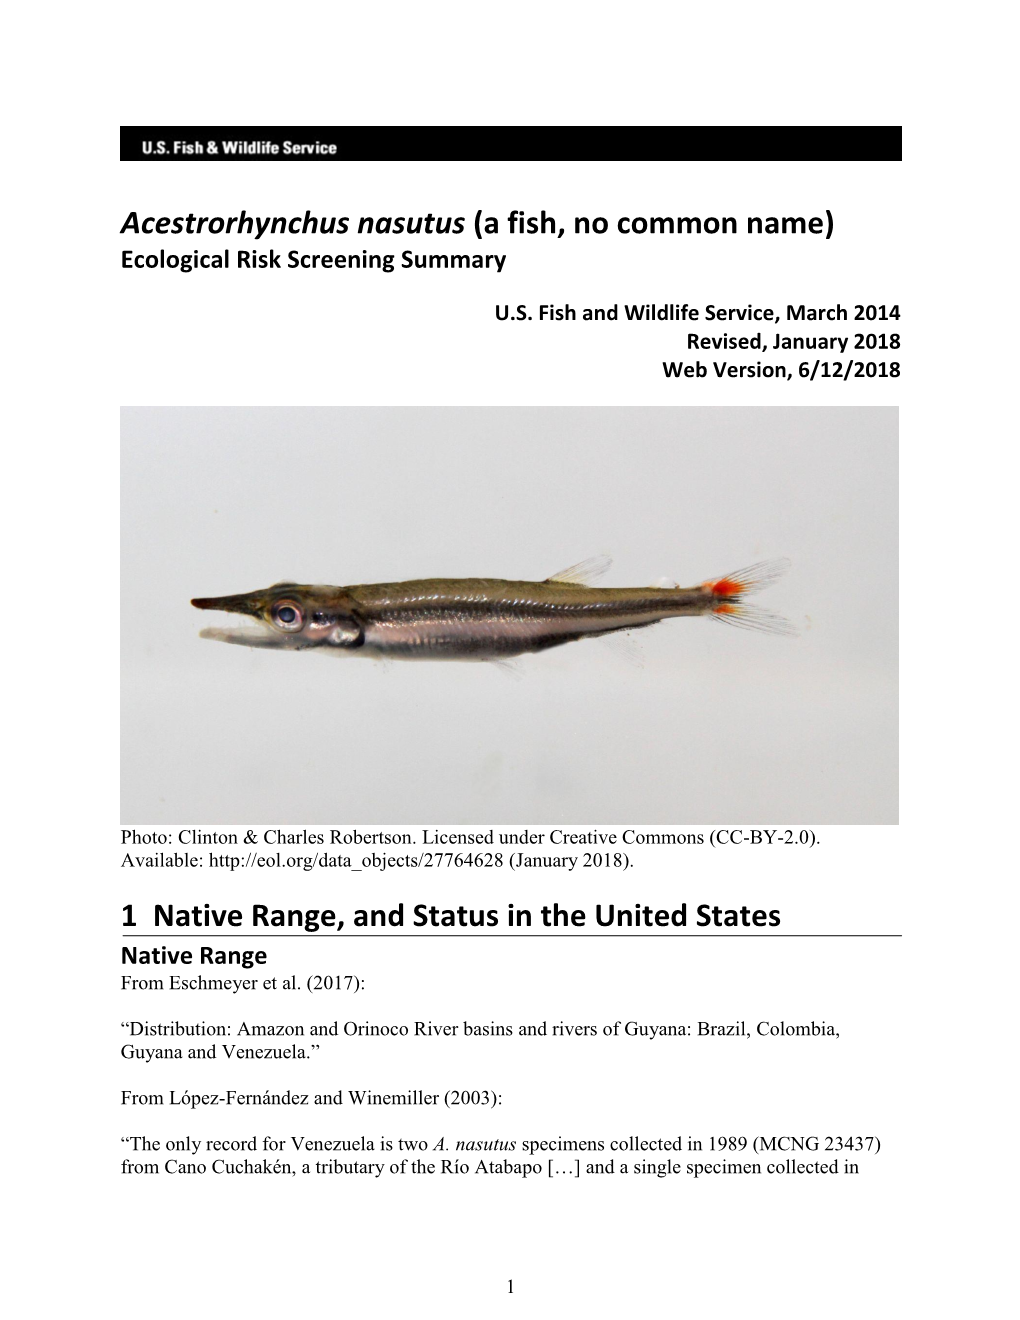 Acestrorhynchus Nasutus (A Fish, No Common Name) Ecological Risk Screening Summary